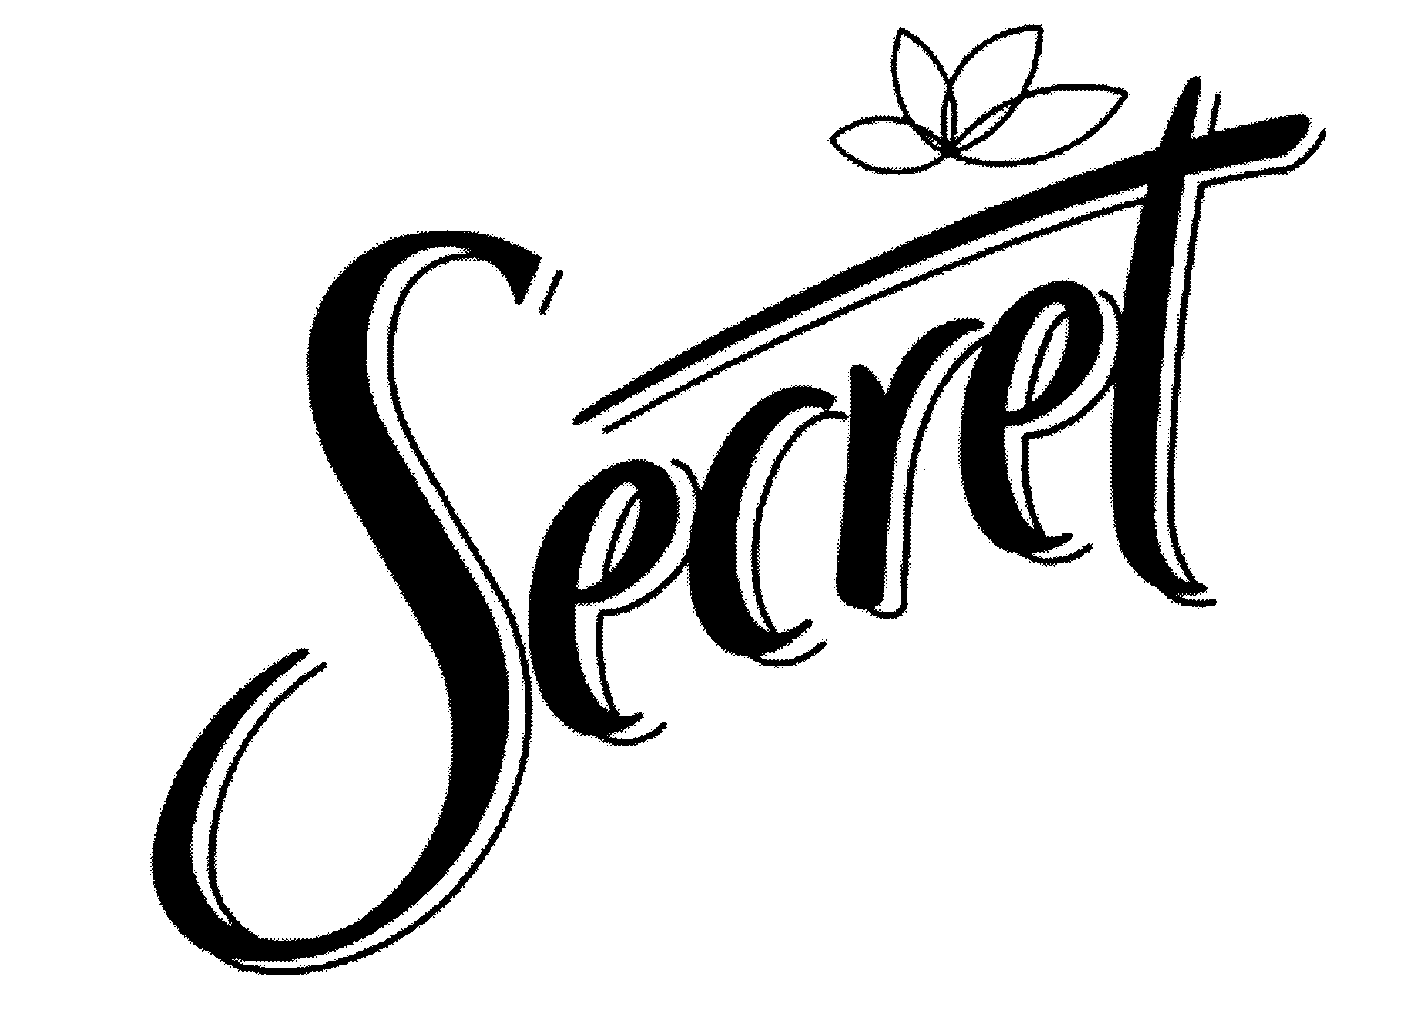 Trademark Logo SECRET